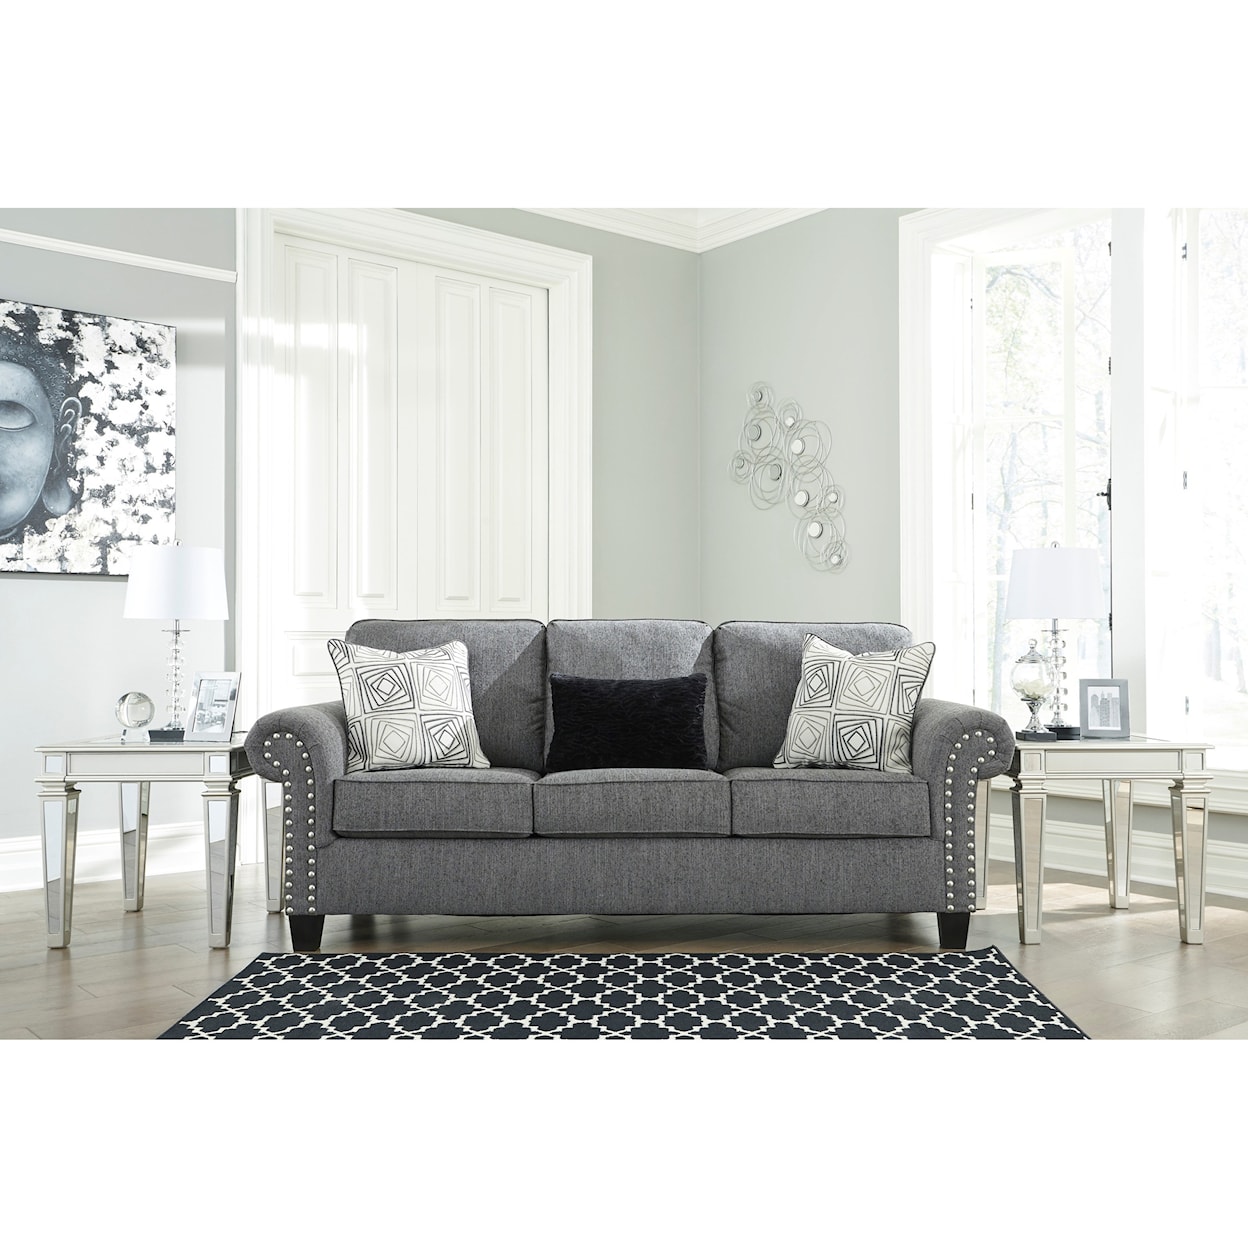 Ashley Furniture Benchcraft Agleno Sofa